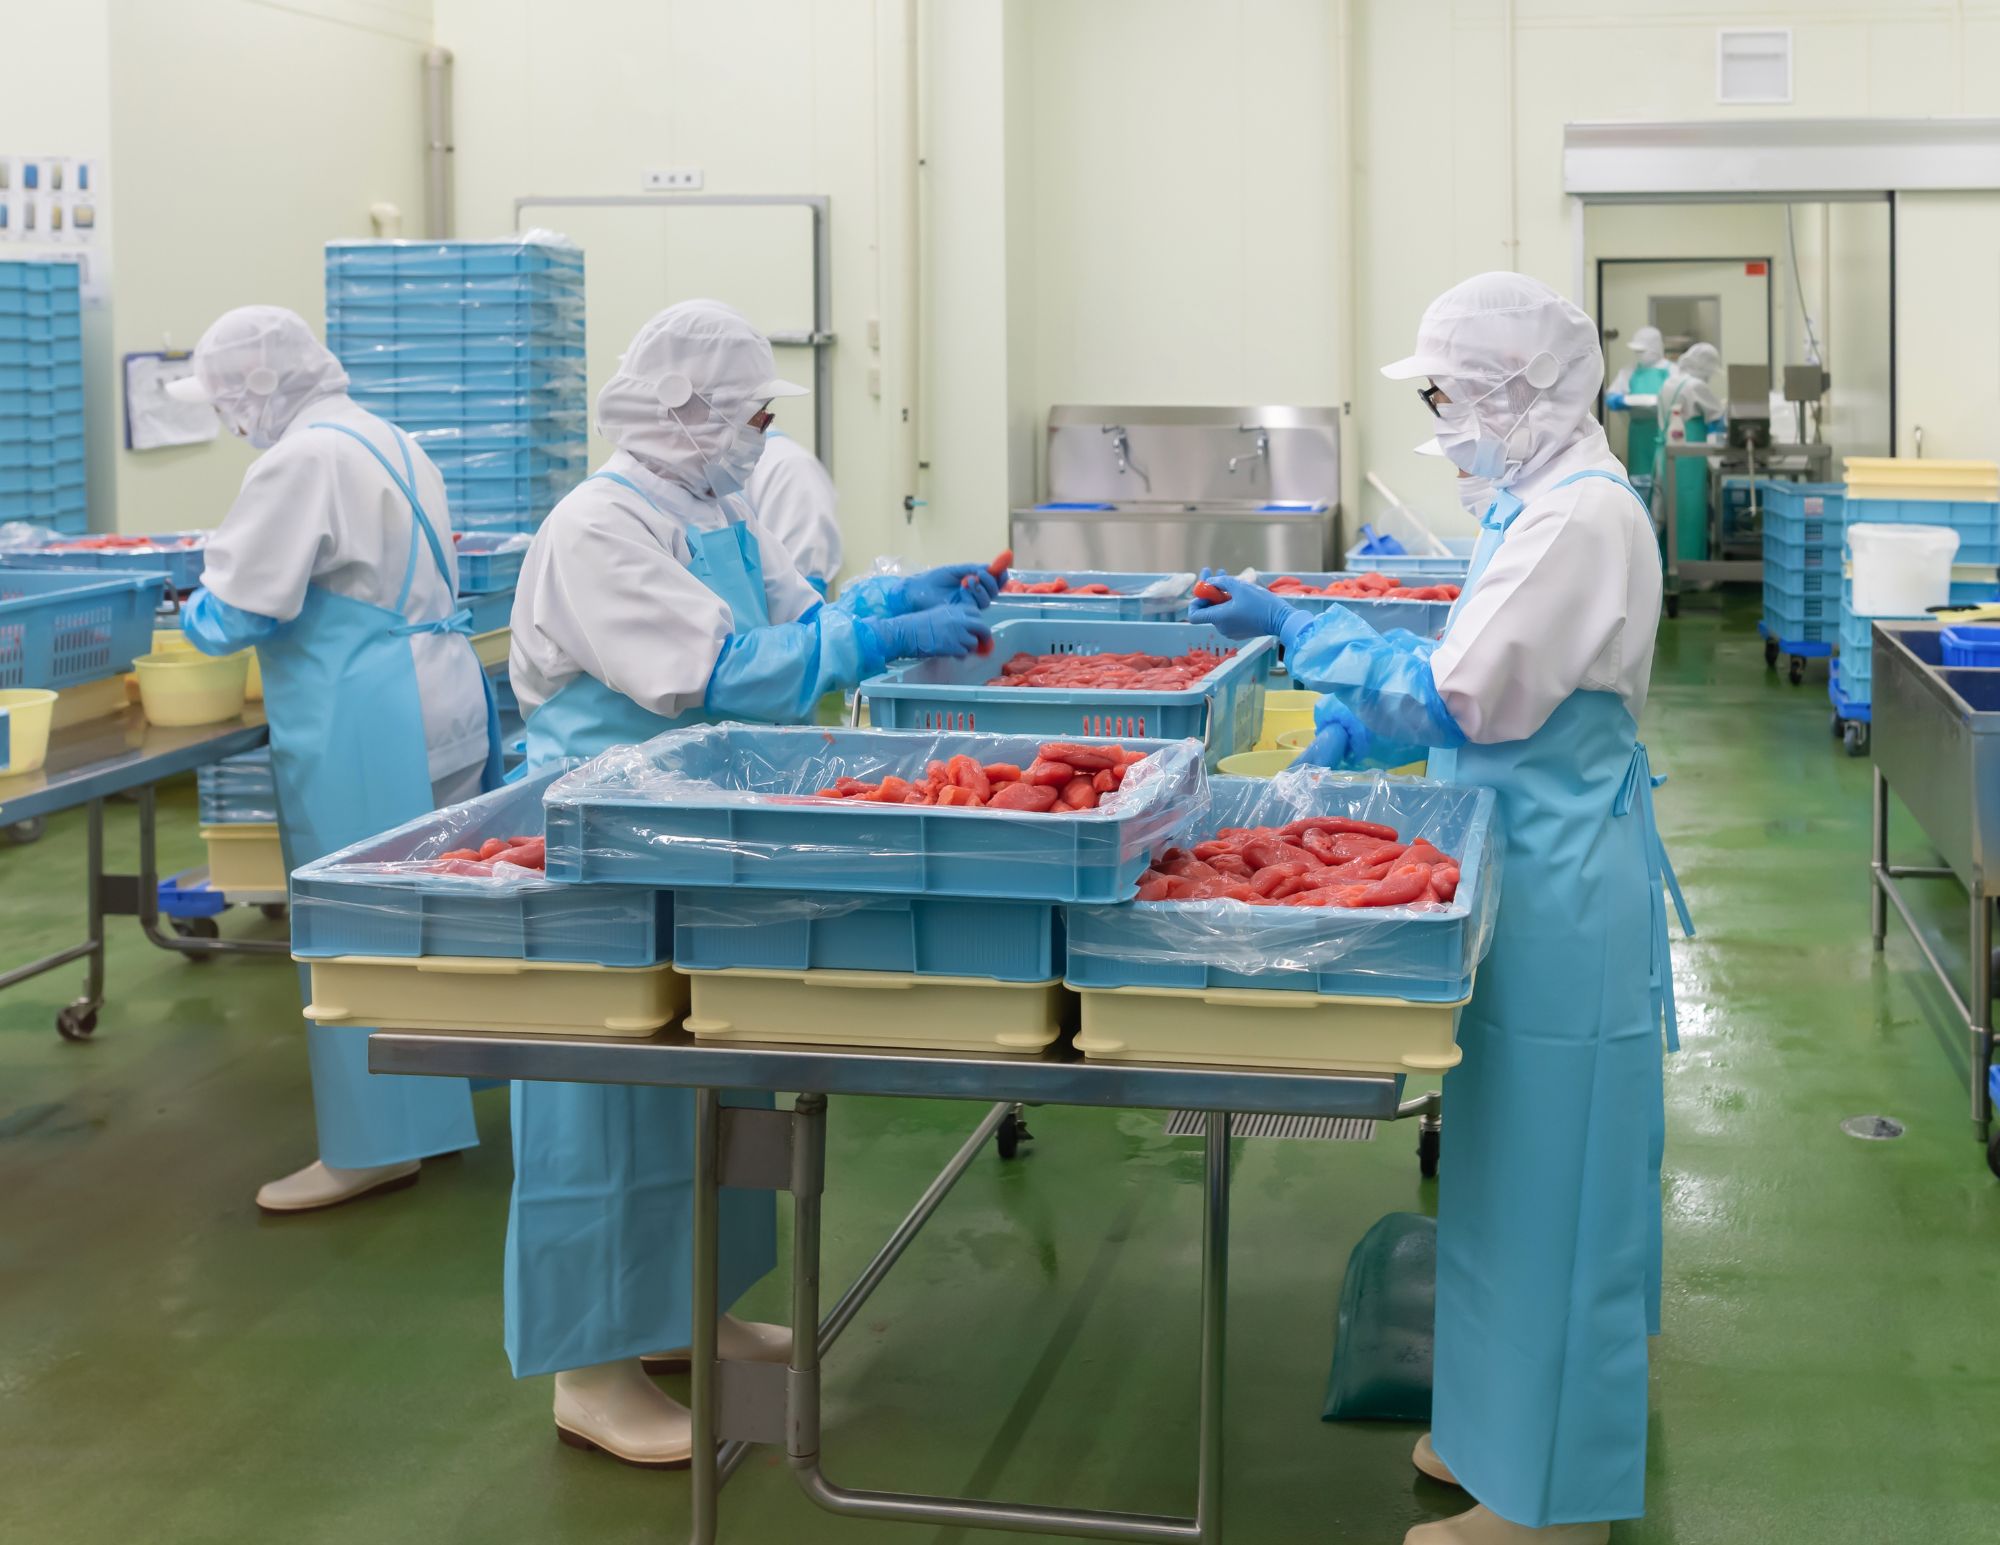 Sebuah pabrik pengolahan makanan telur ikan cod pedas (Fokus pada mentaiko) di Prefektur Shizuoka, Jepang.